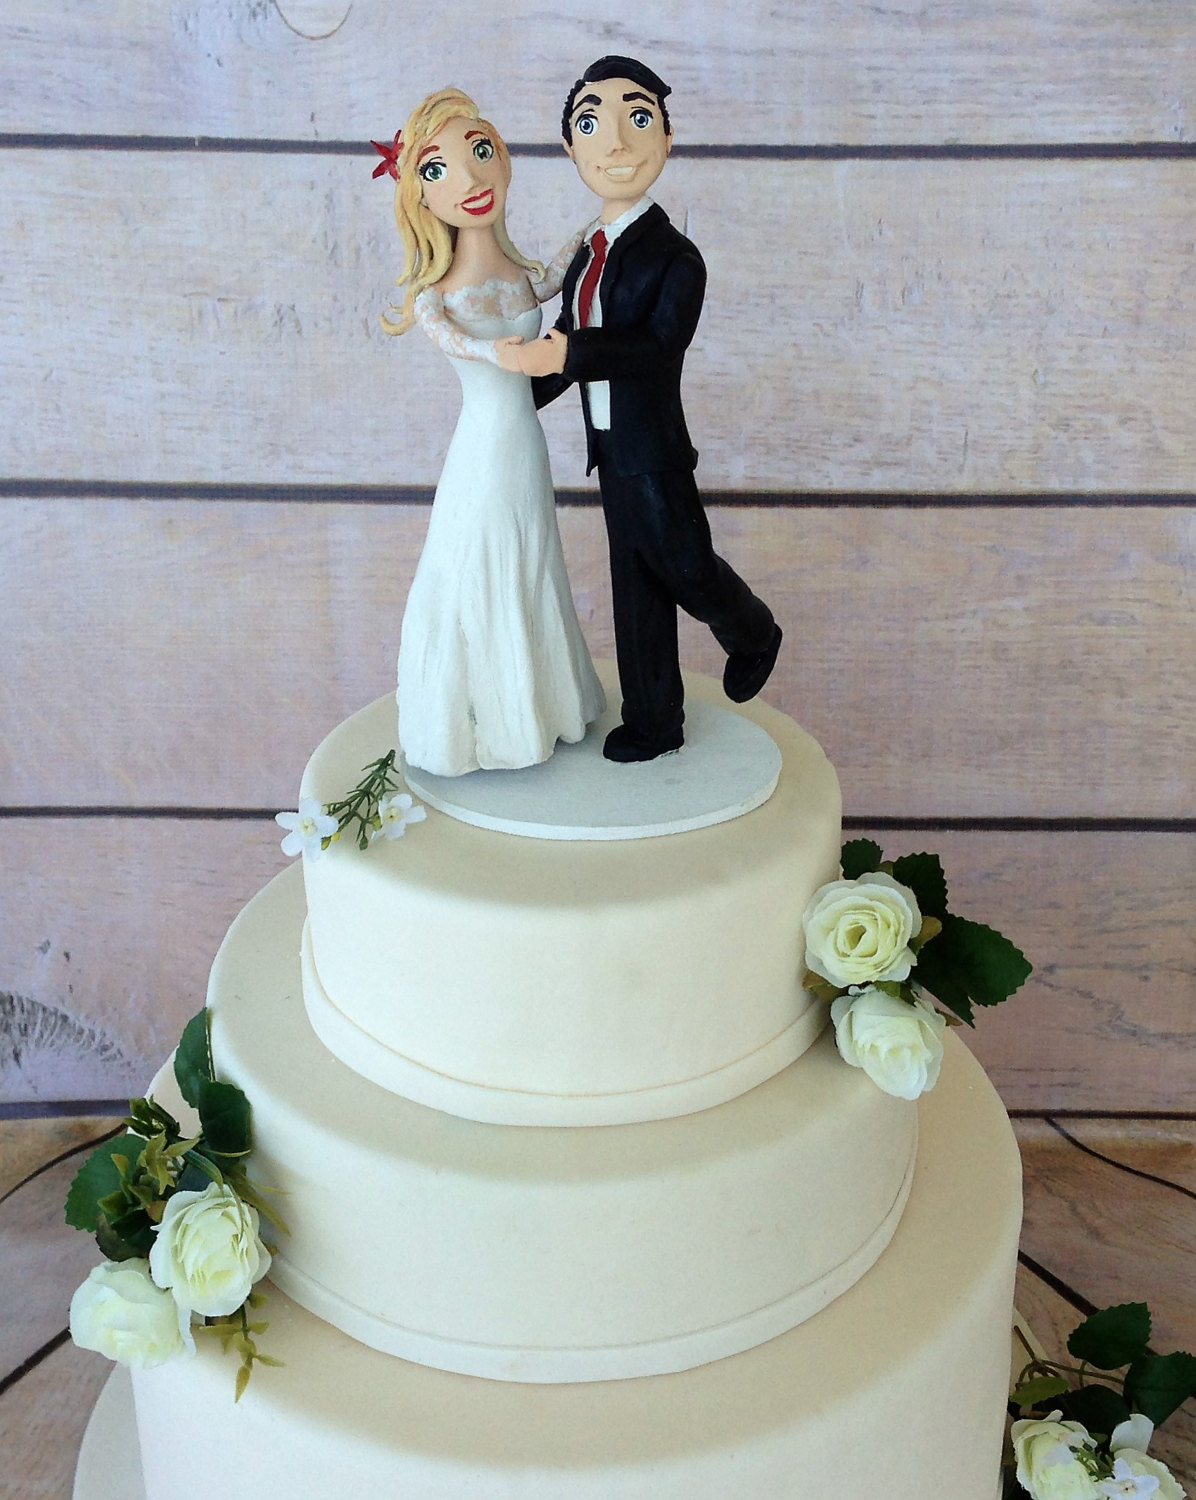 dancing bride and groom cake topper | https://emmalinebride.com/wedding/dancing-bride-and-groom-cake-topper/